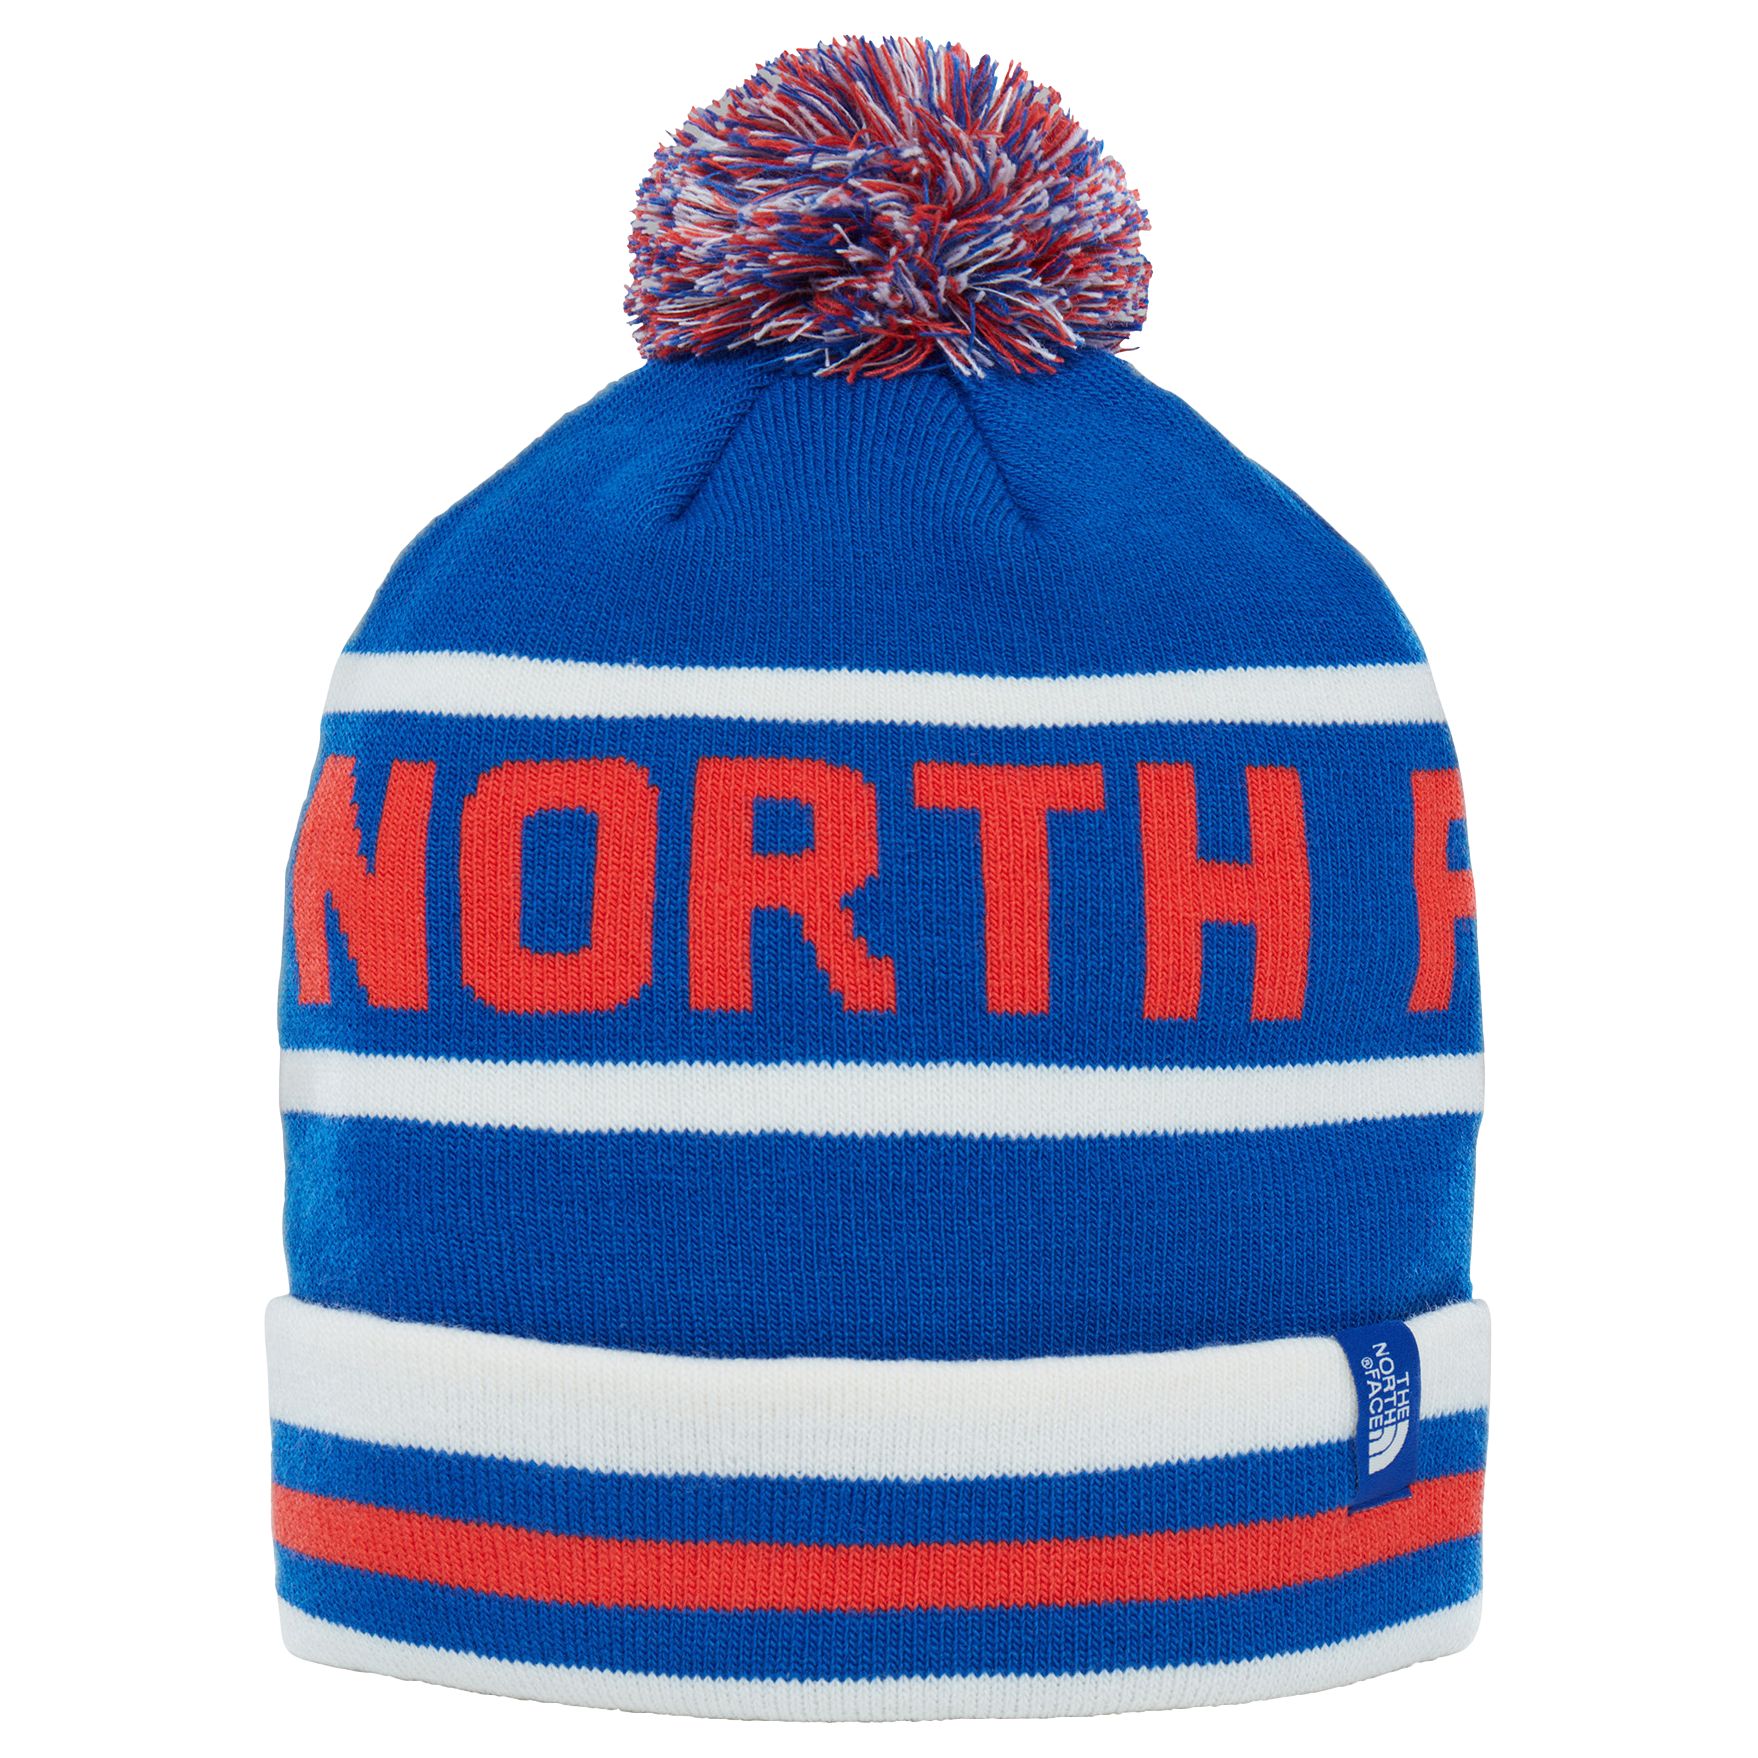 north face bobble hat